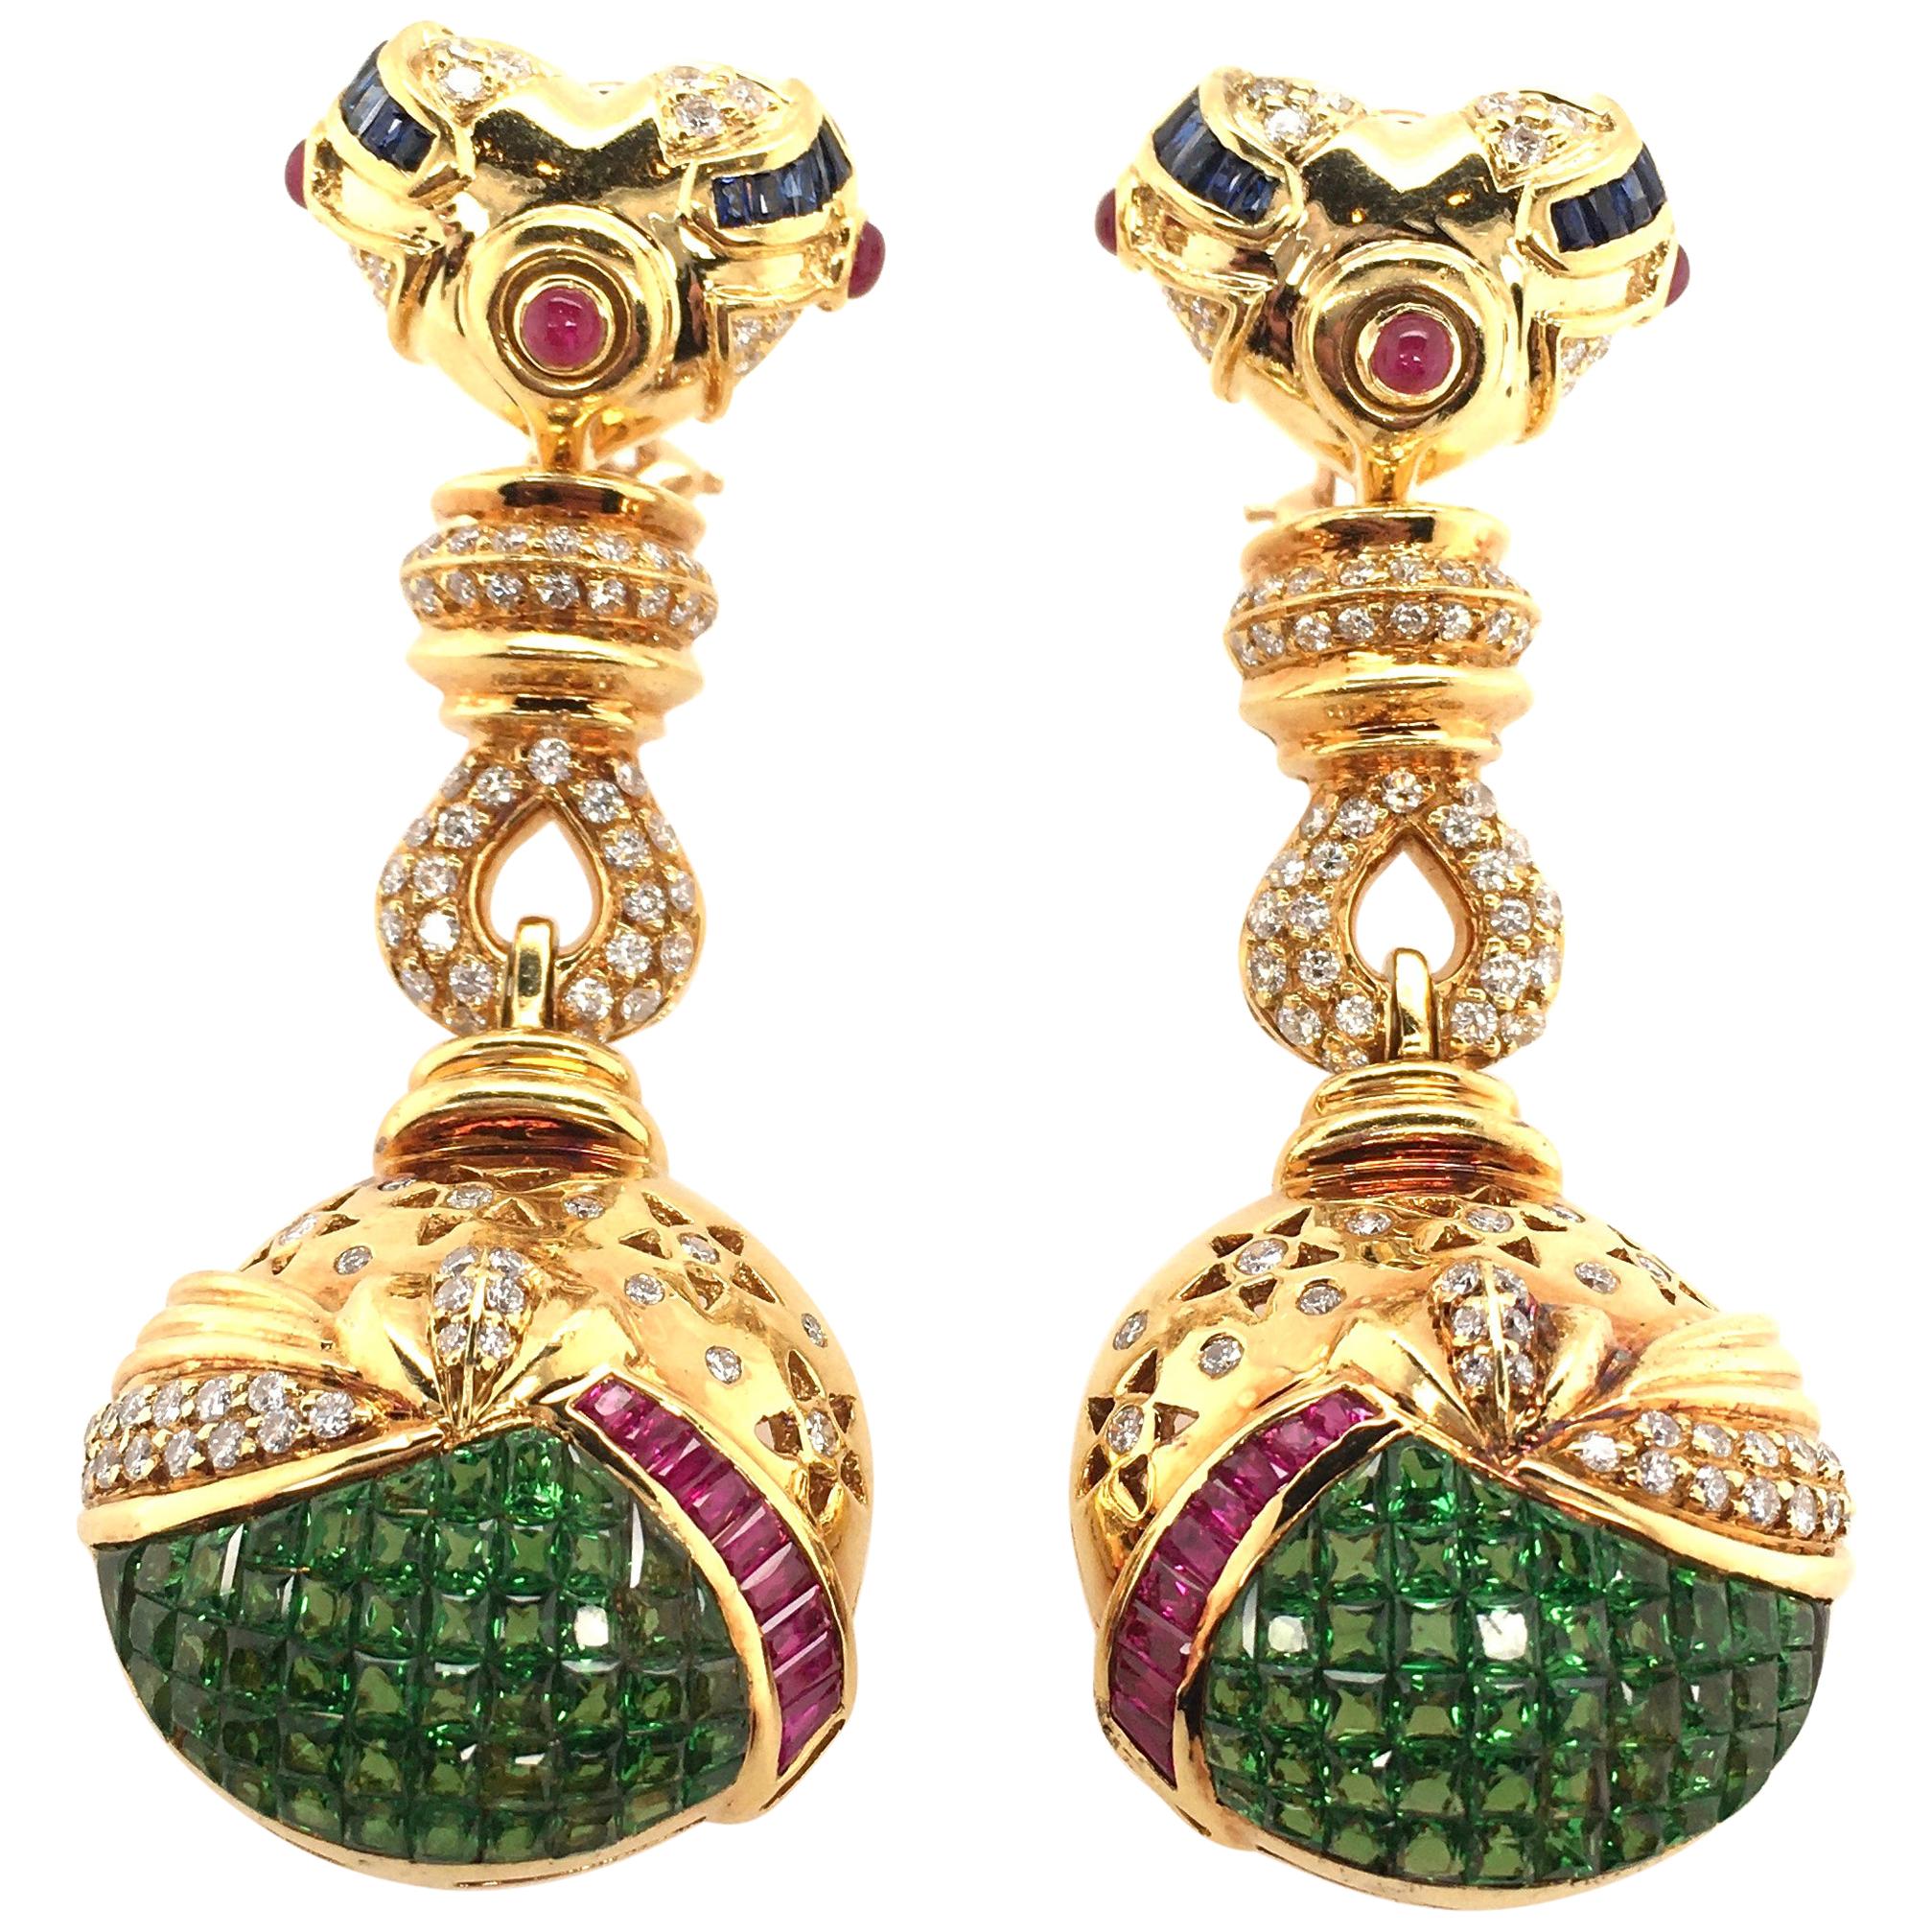 Salavetti Tsavorite Garnet, Ruby, Sapphire, Diamond and Gold Earrings